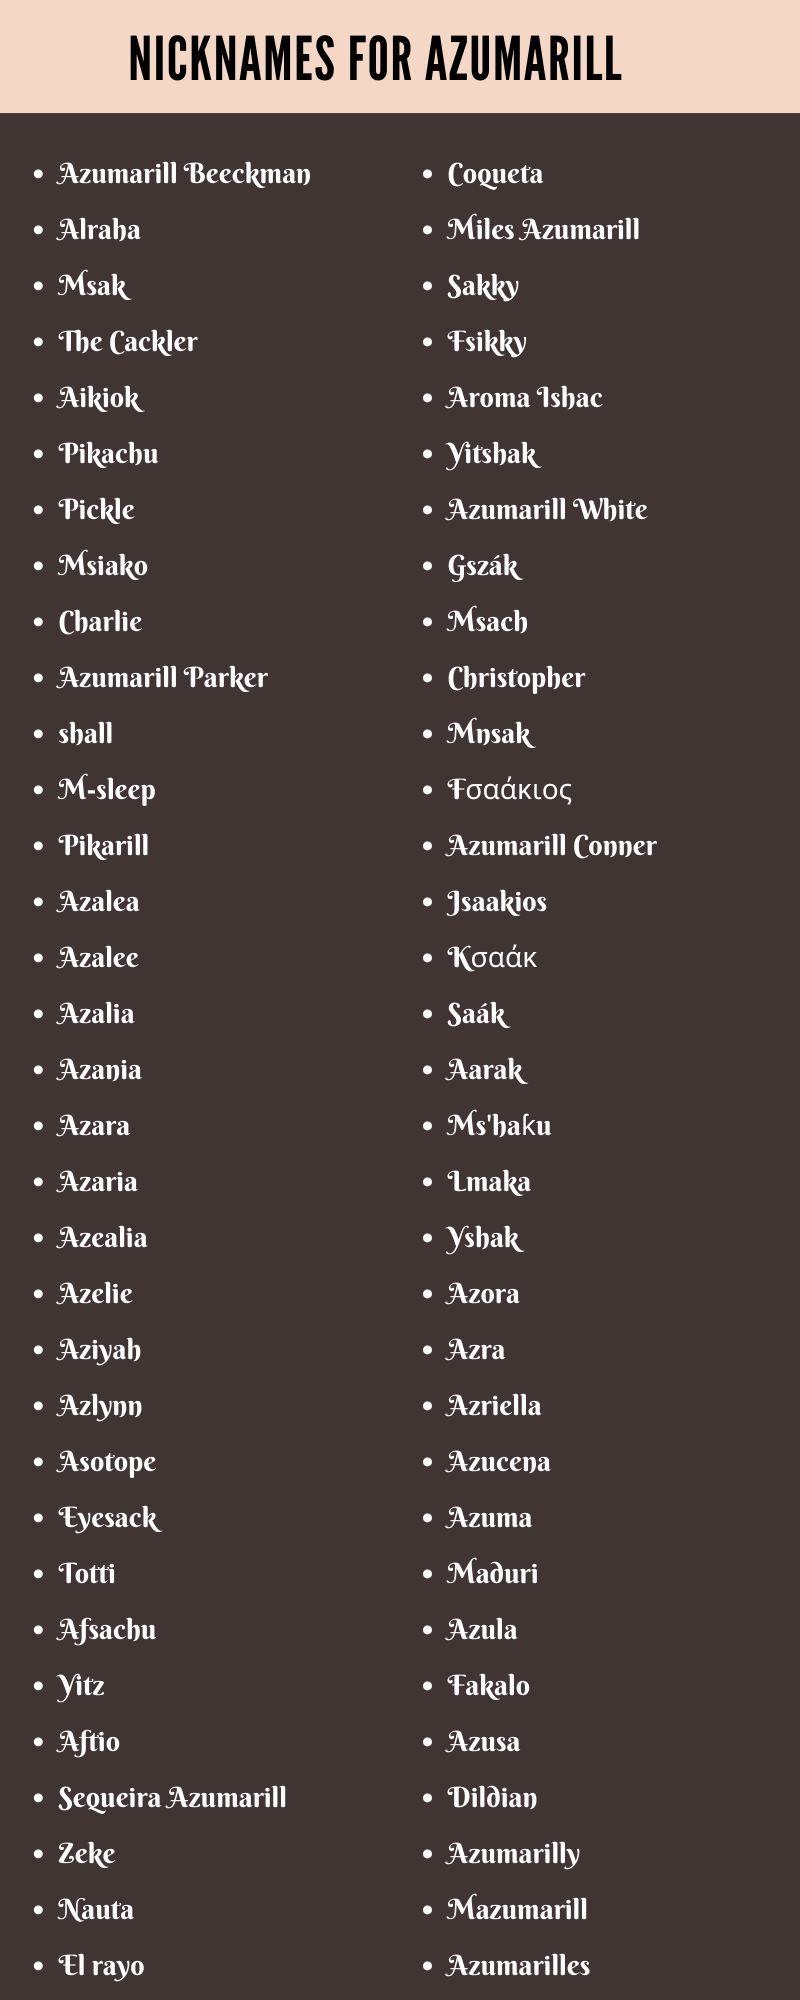 Nicknames For Azumarill